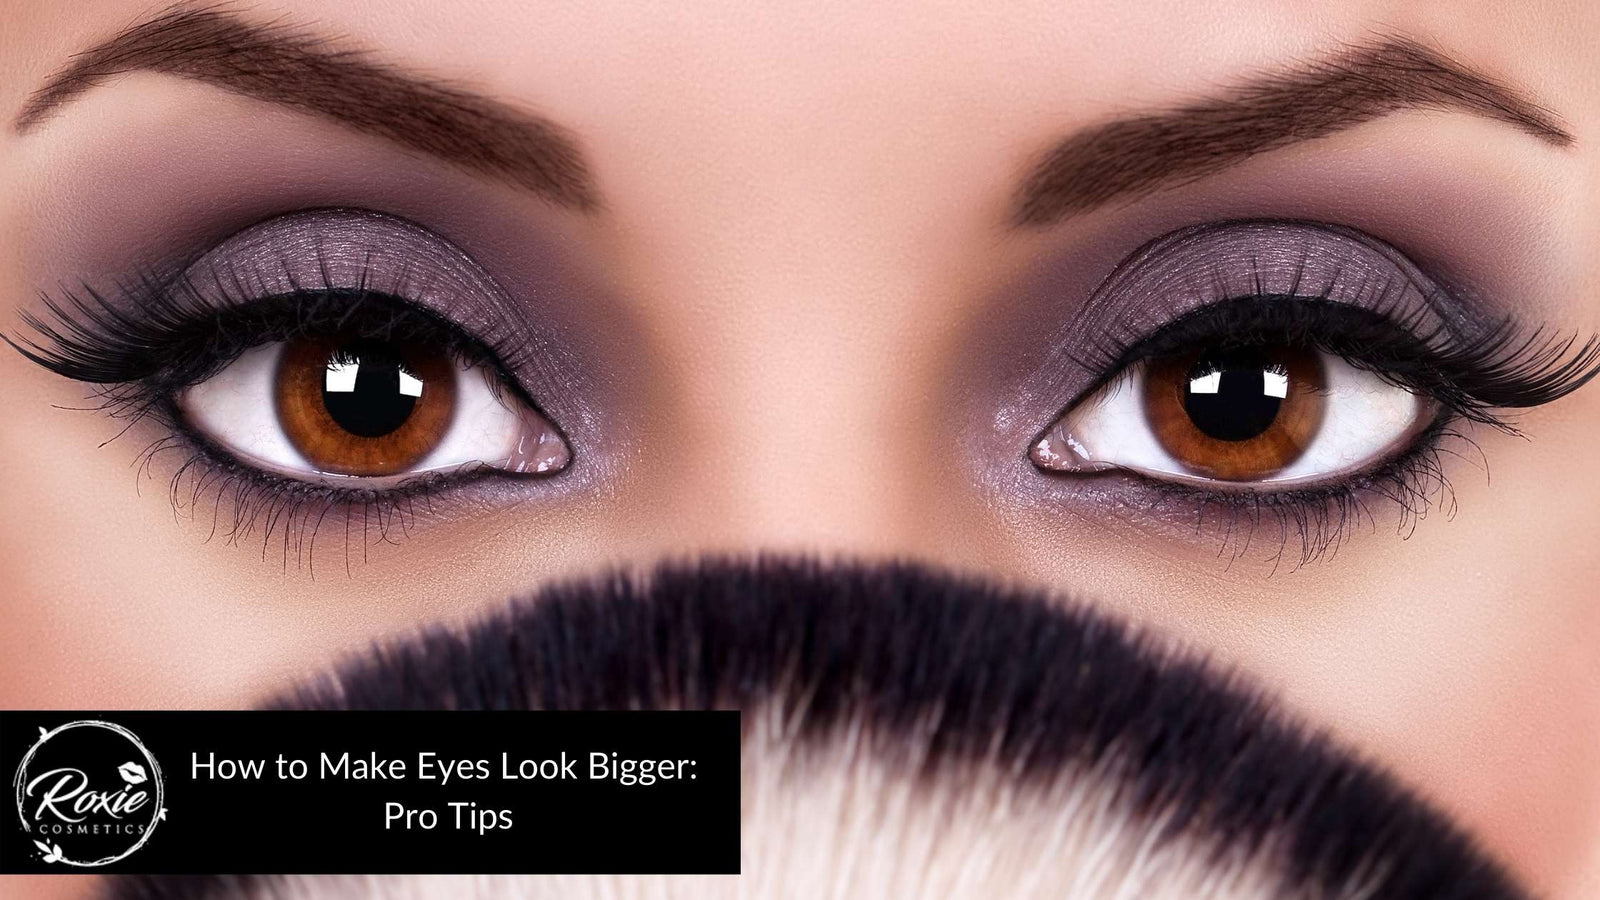 How to Make Eye Look Bigger